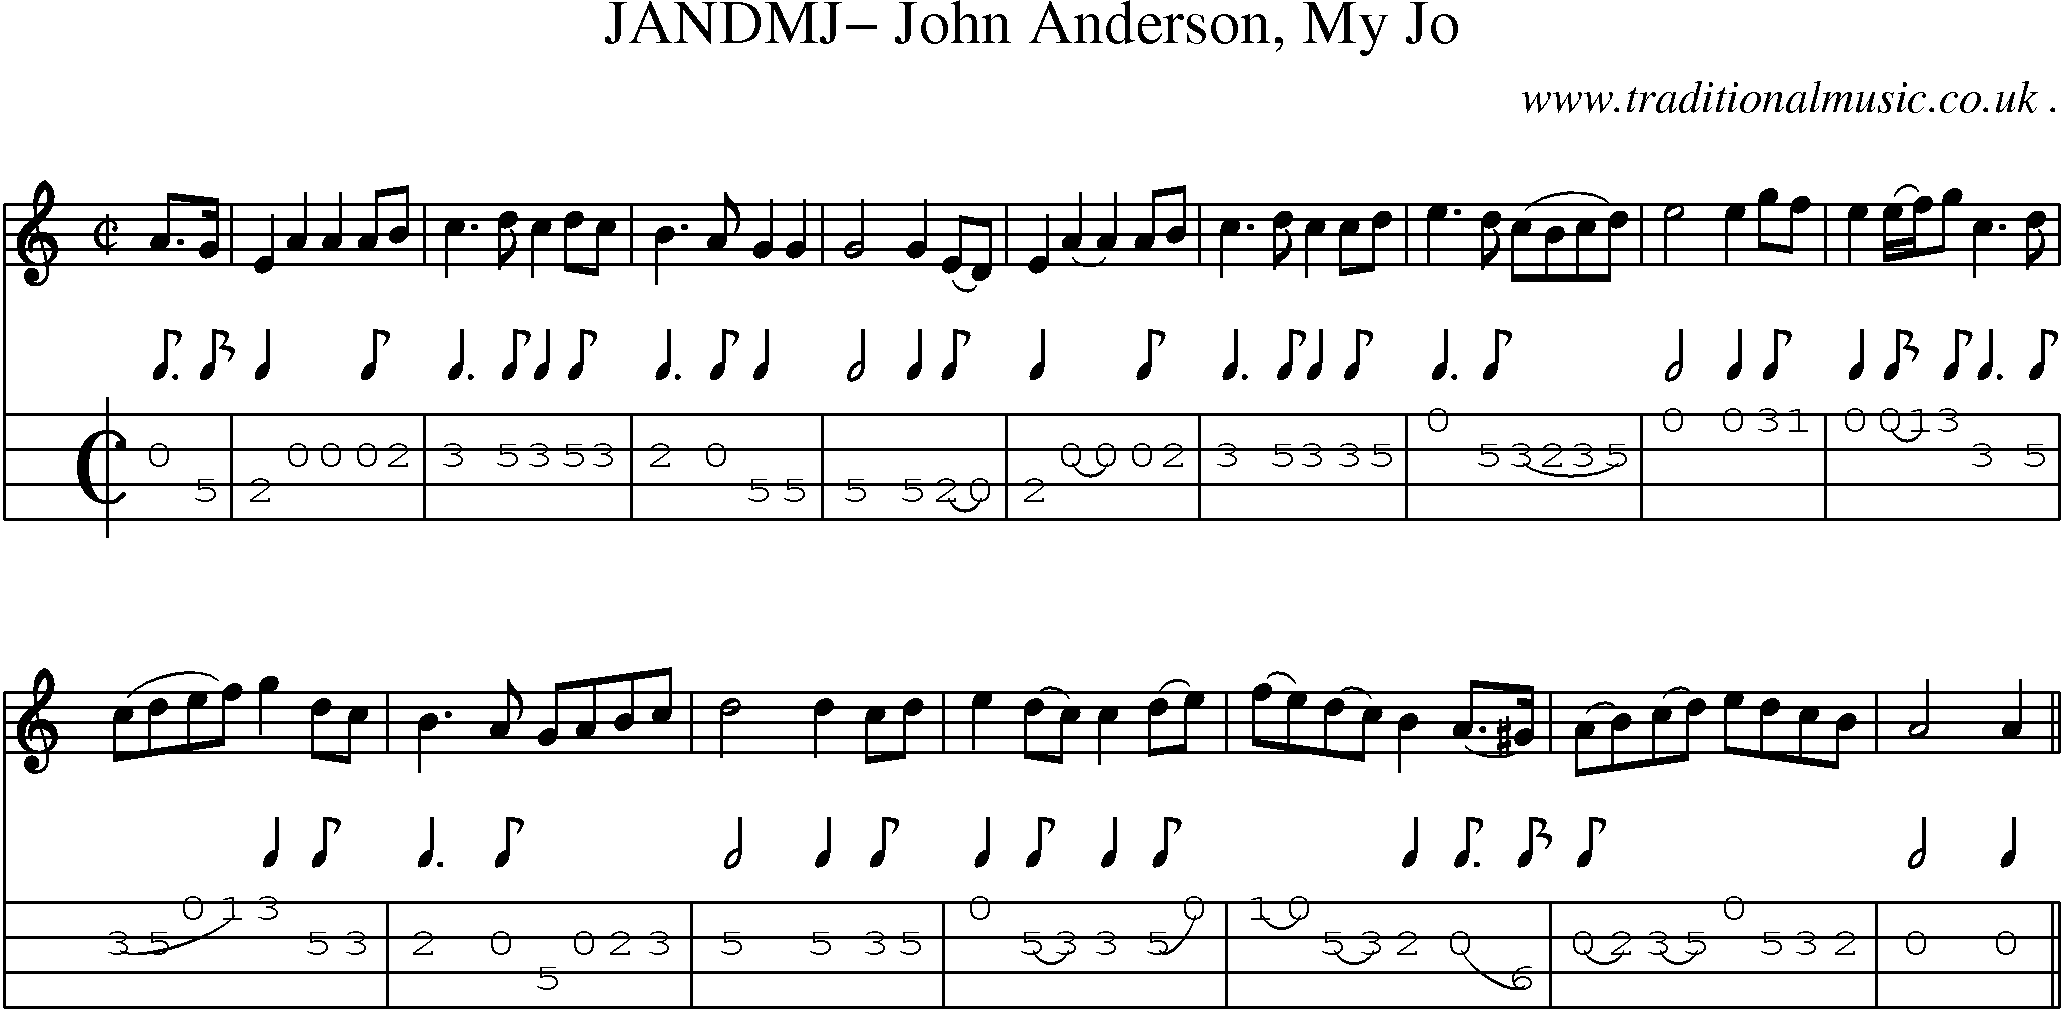 Sheet-Music and Mandolin Tabs for Jandmj John Anderson My Jo